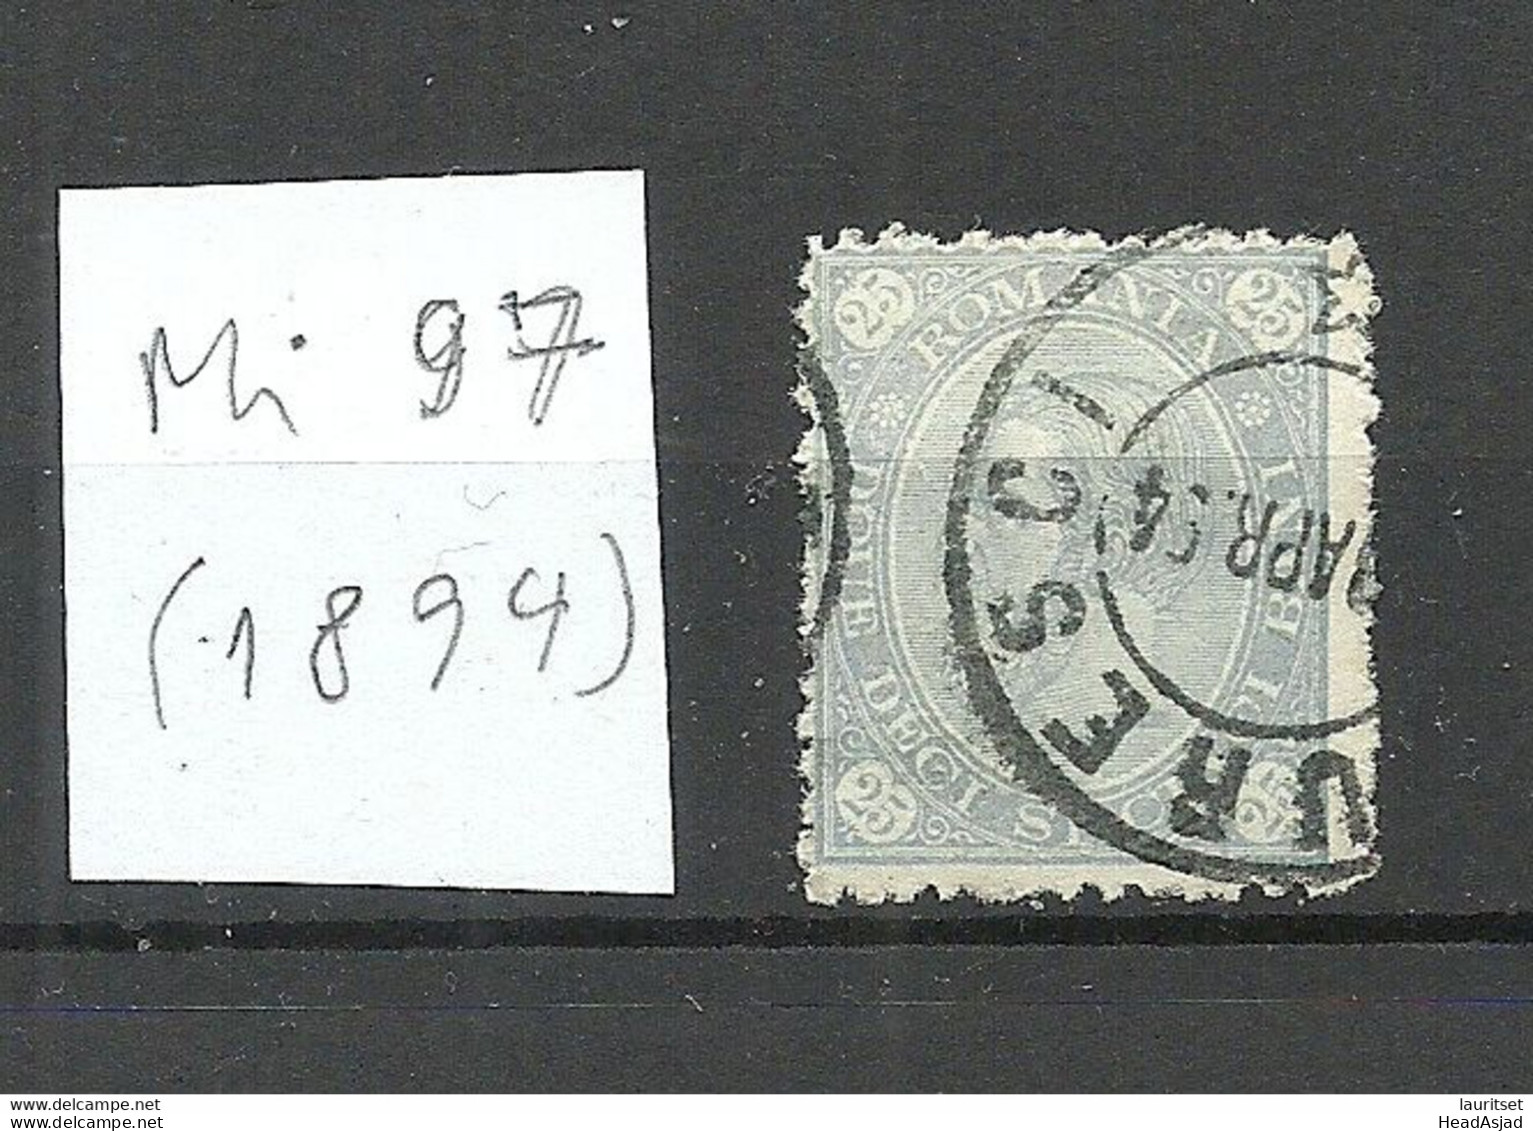 ROMANIA Rumänien 1894 King Karl I König Michel 97 O - Used Stamps